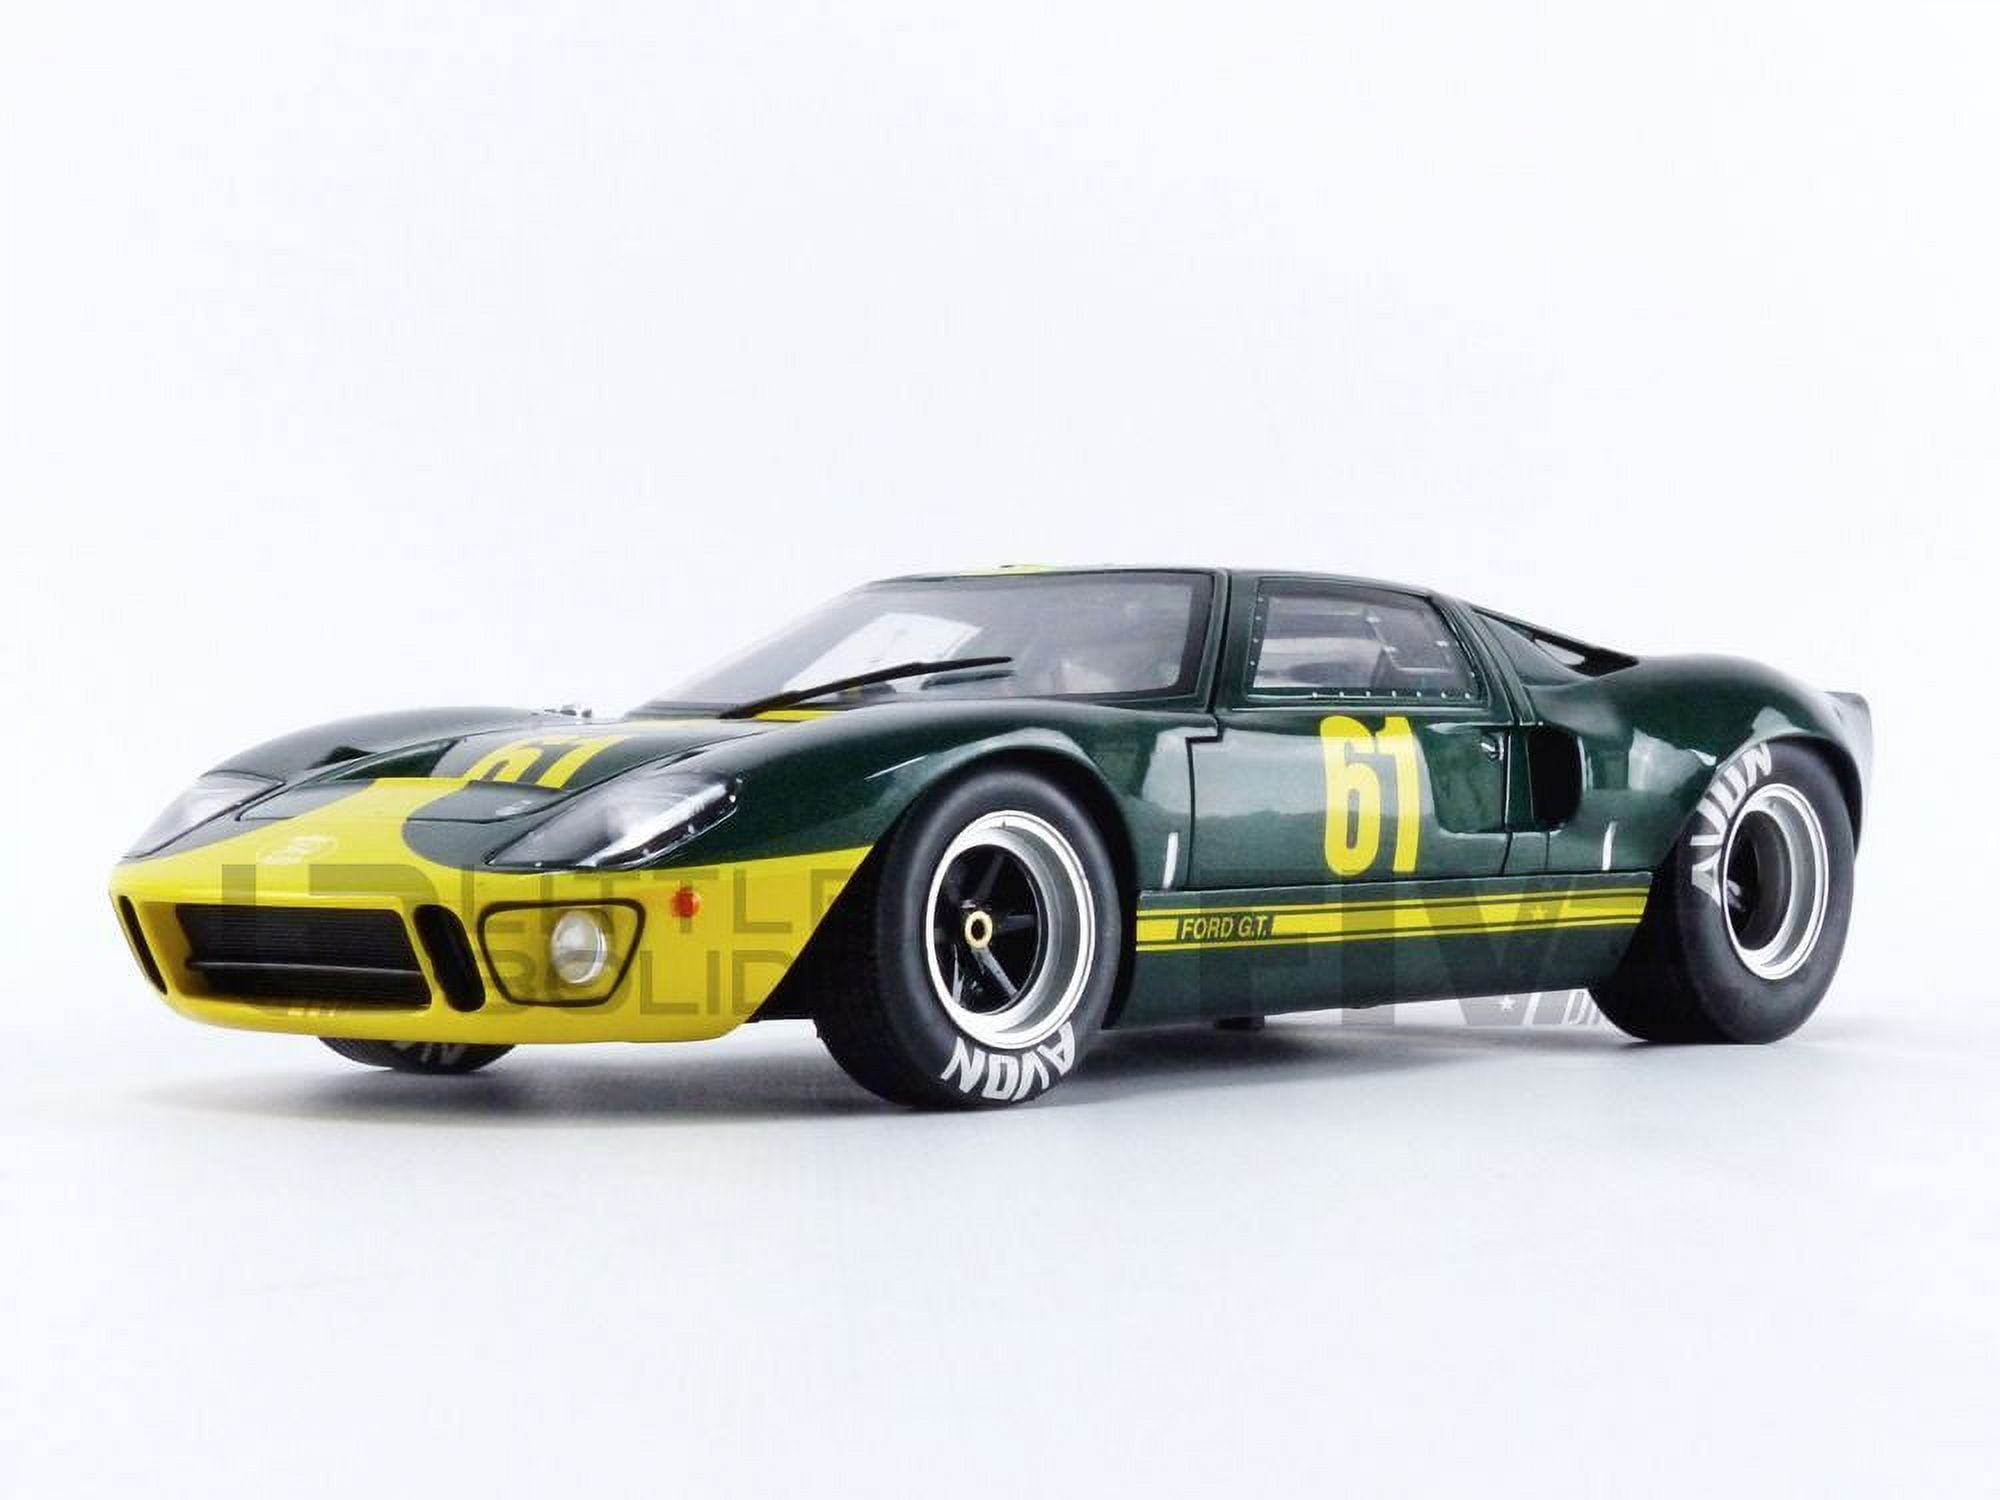 SOLIDO 1/18 - FORD GT40 MK1 - Winner Le Mans 1968